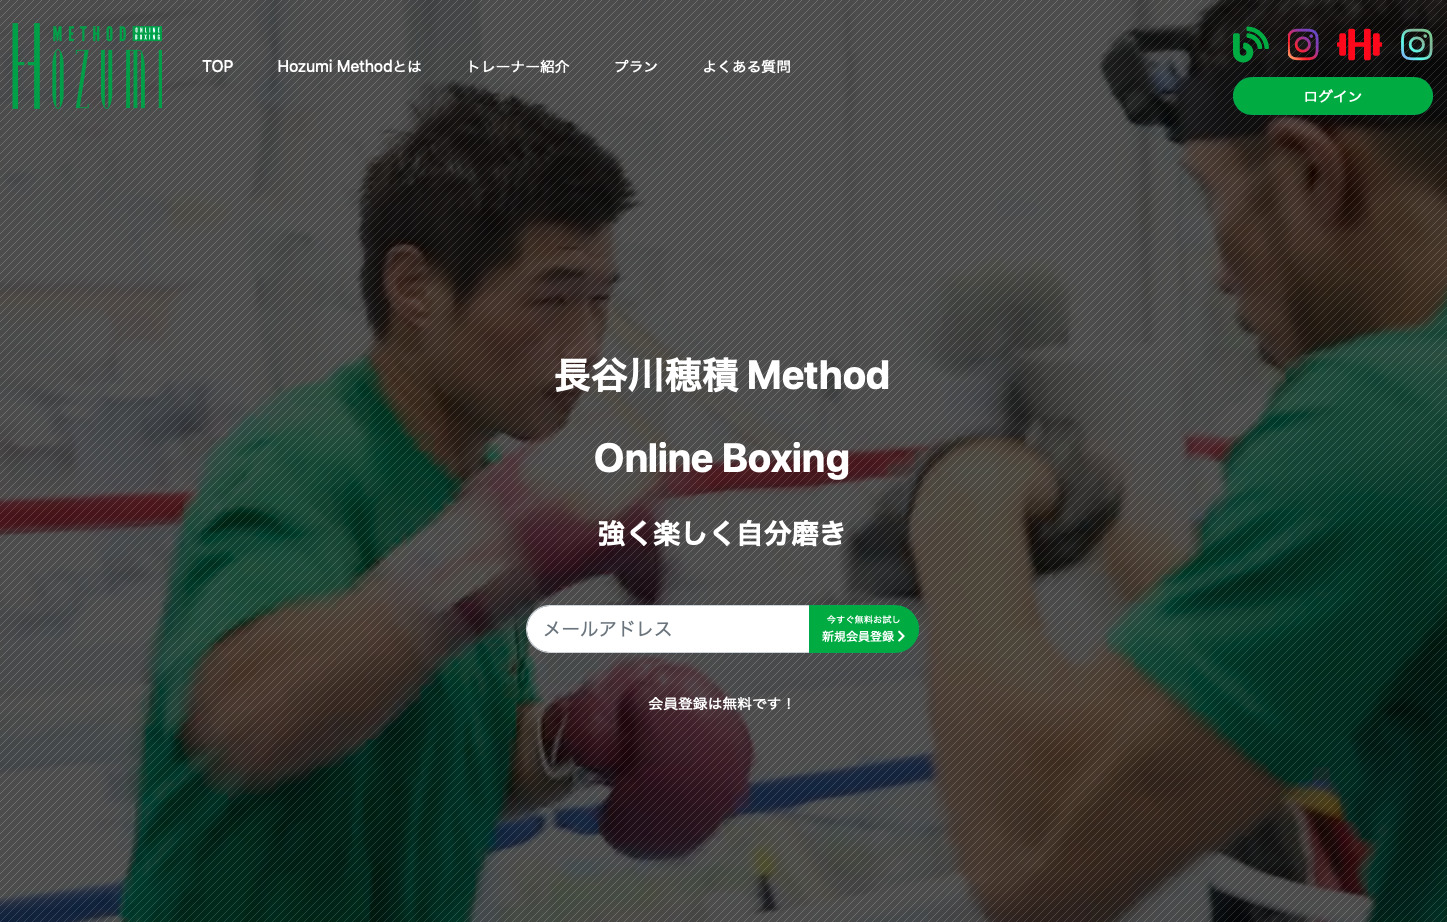 Hozumi Method オンラインボクシング様に動画配信サイト 長谷川穂積 Method Online Boxing としてマレントcms Stmingo をご導入いただきました